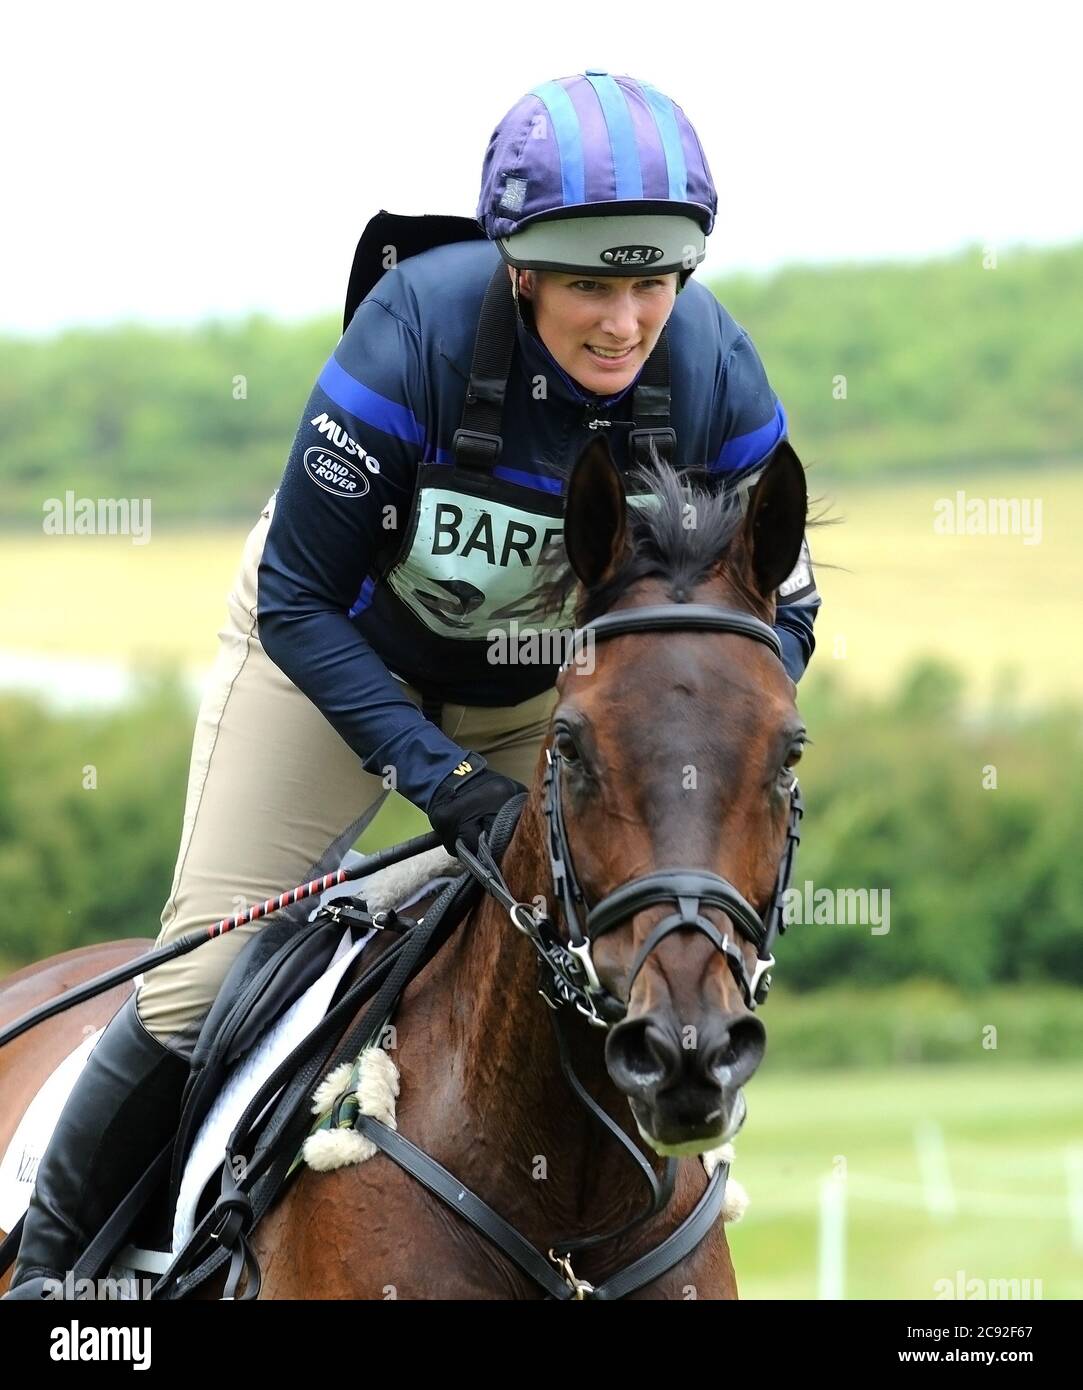 Zara Tindall MBE Equestrian Olympian en compétition à Evesting Evanting Champion du monde 2006 fille d'Anne, princesse Royal et capitaine Mark Phillips Banque D'Images